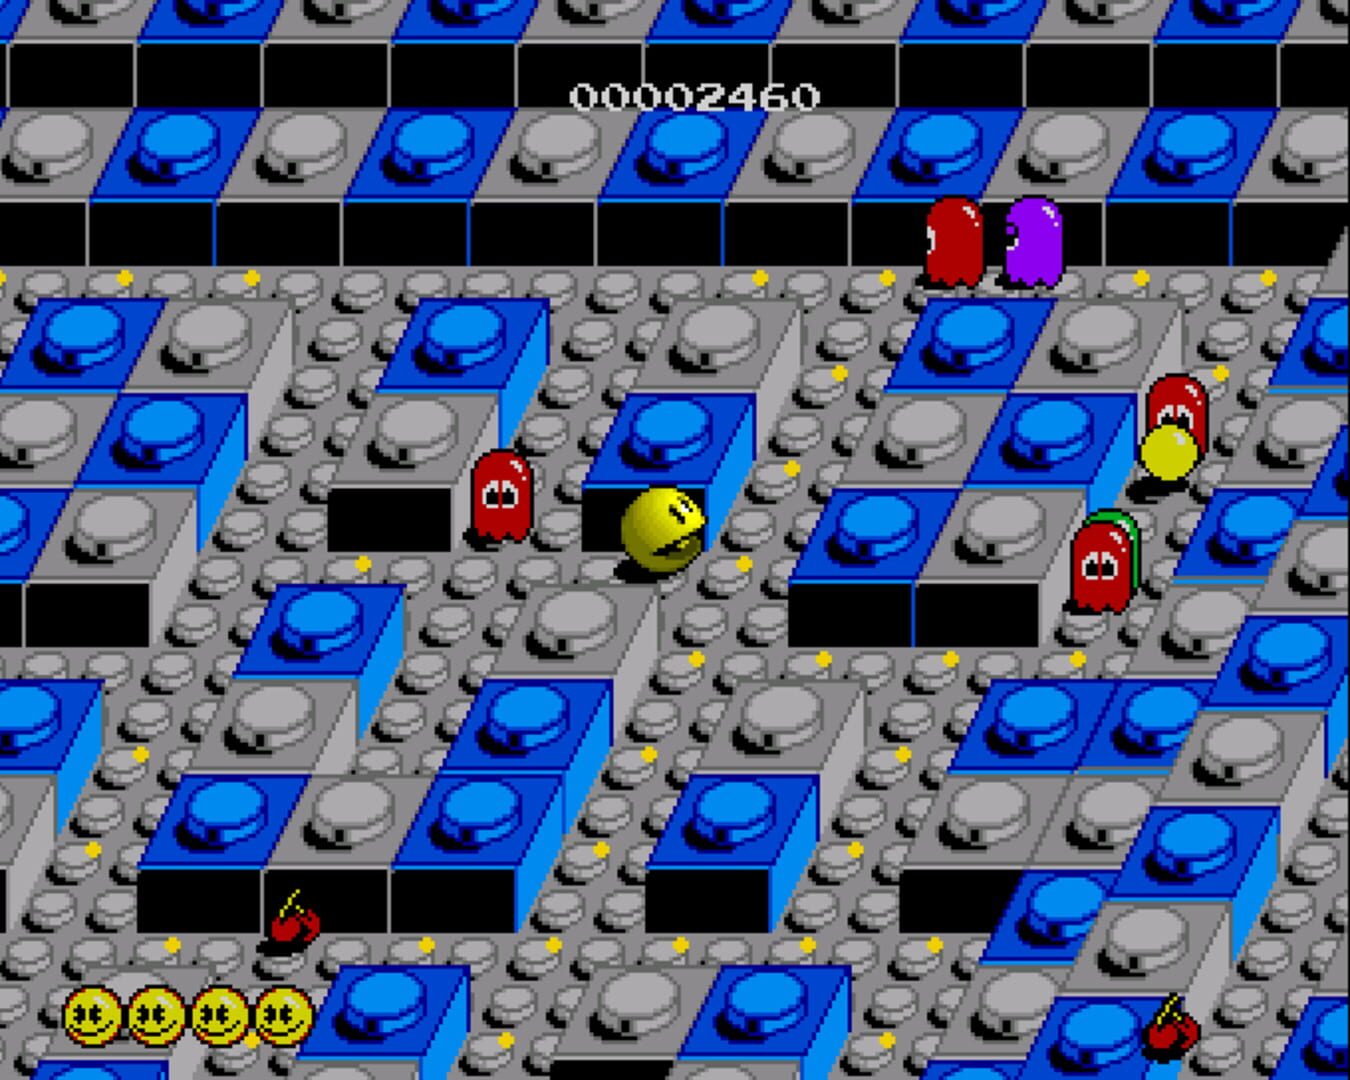 Pac-Mania screenshot